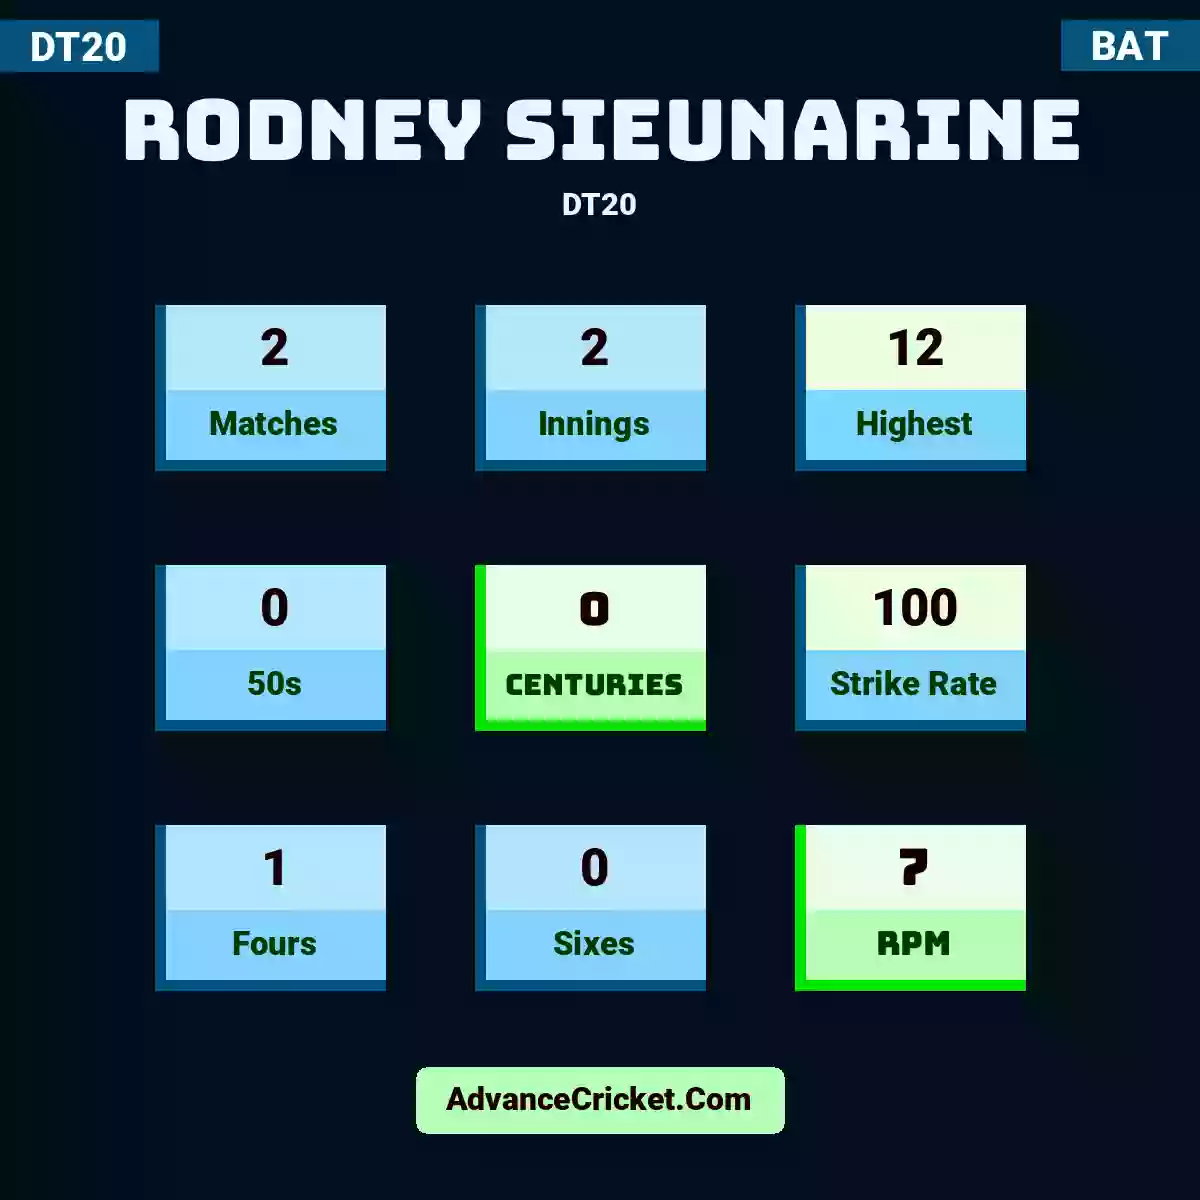 Rodney Sieunarine DT20 , Rodney Sieunarine played 2 matches, scored 12 runs as highest, 0 half-centuries, and 0 centuries, with a strike rate of 100. R.Sieunarine hit 1 fours and 0 sixes, with an RPM of 7.